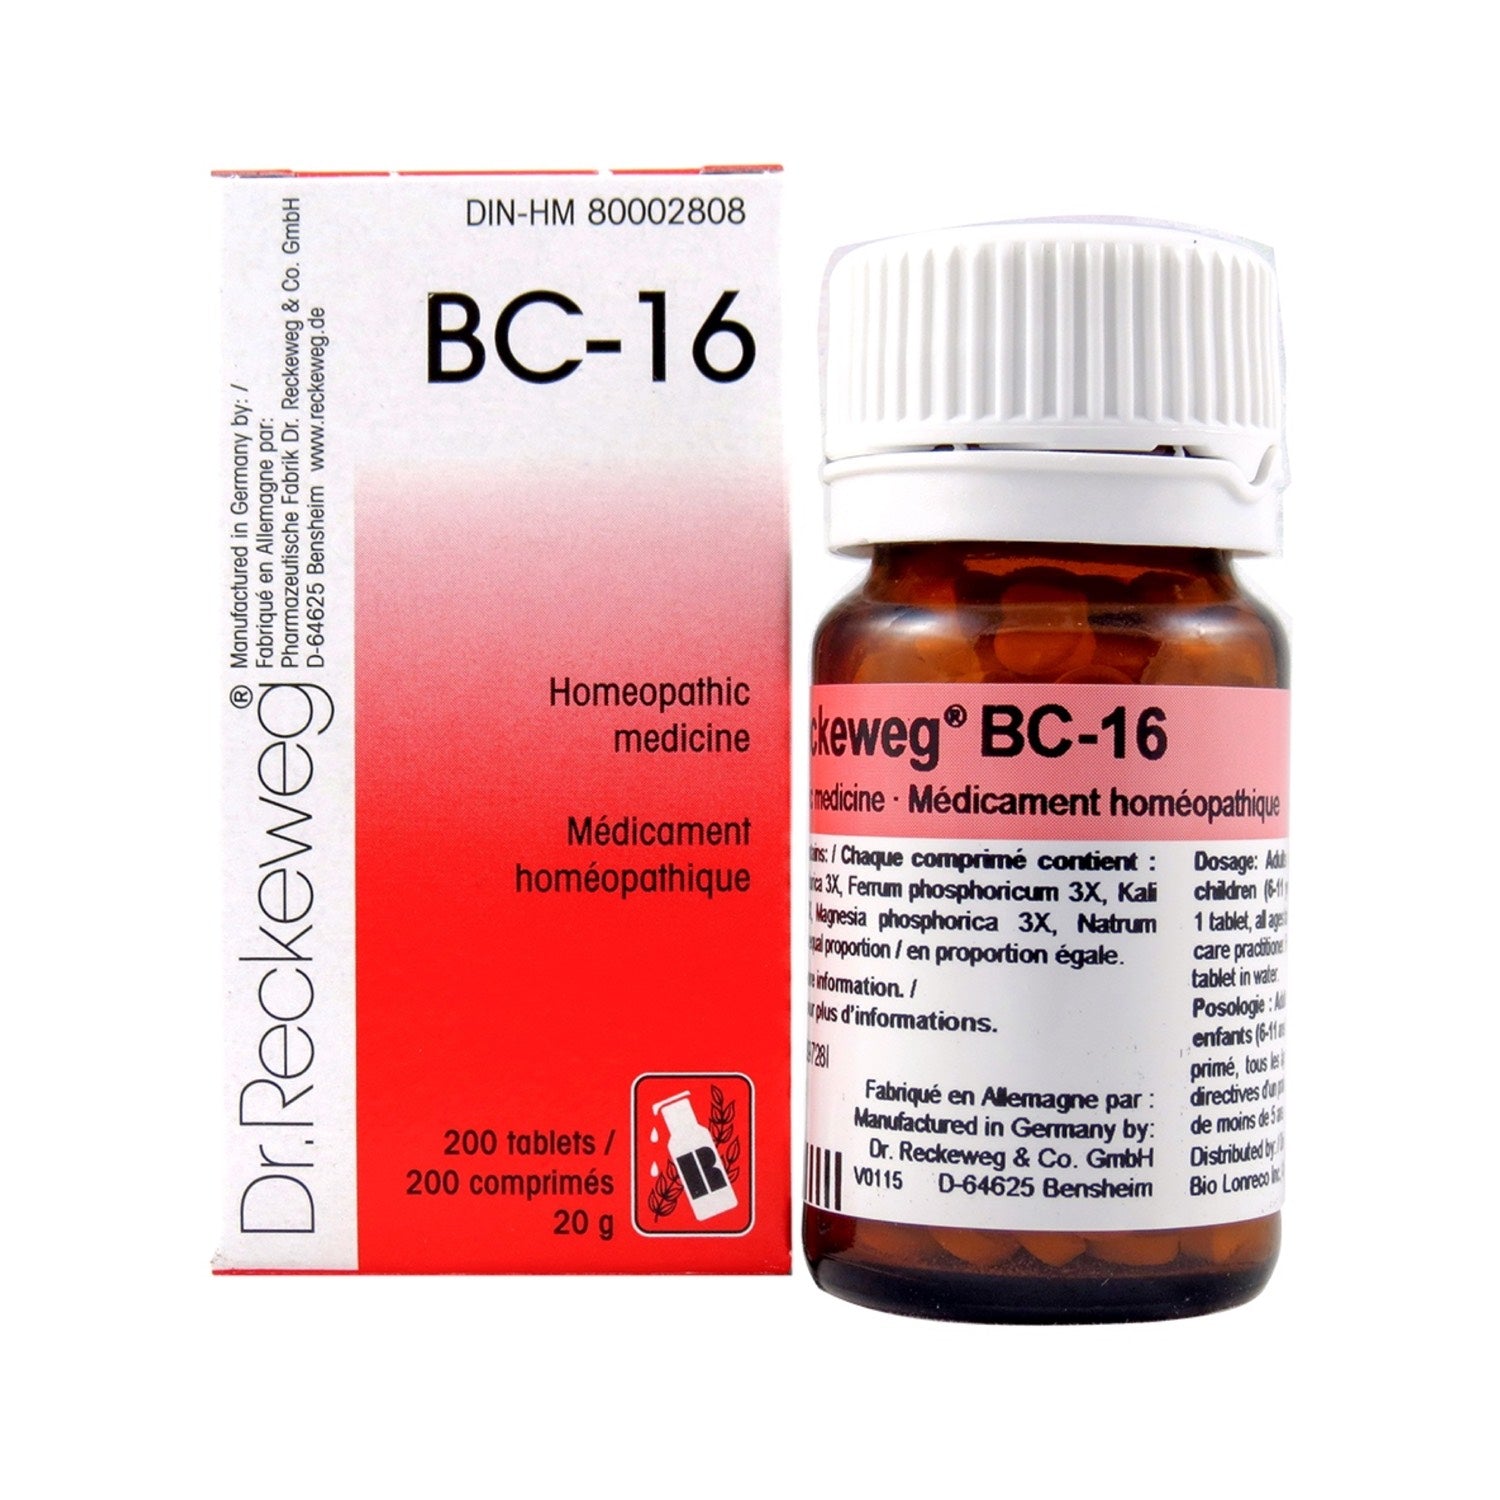 BC-16 Homeopathic medicine – Combination salt  200 tablets (20 g)